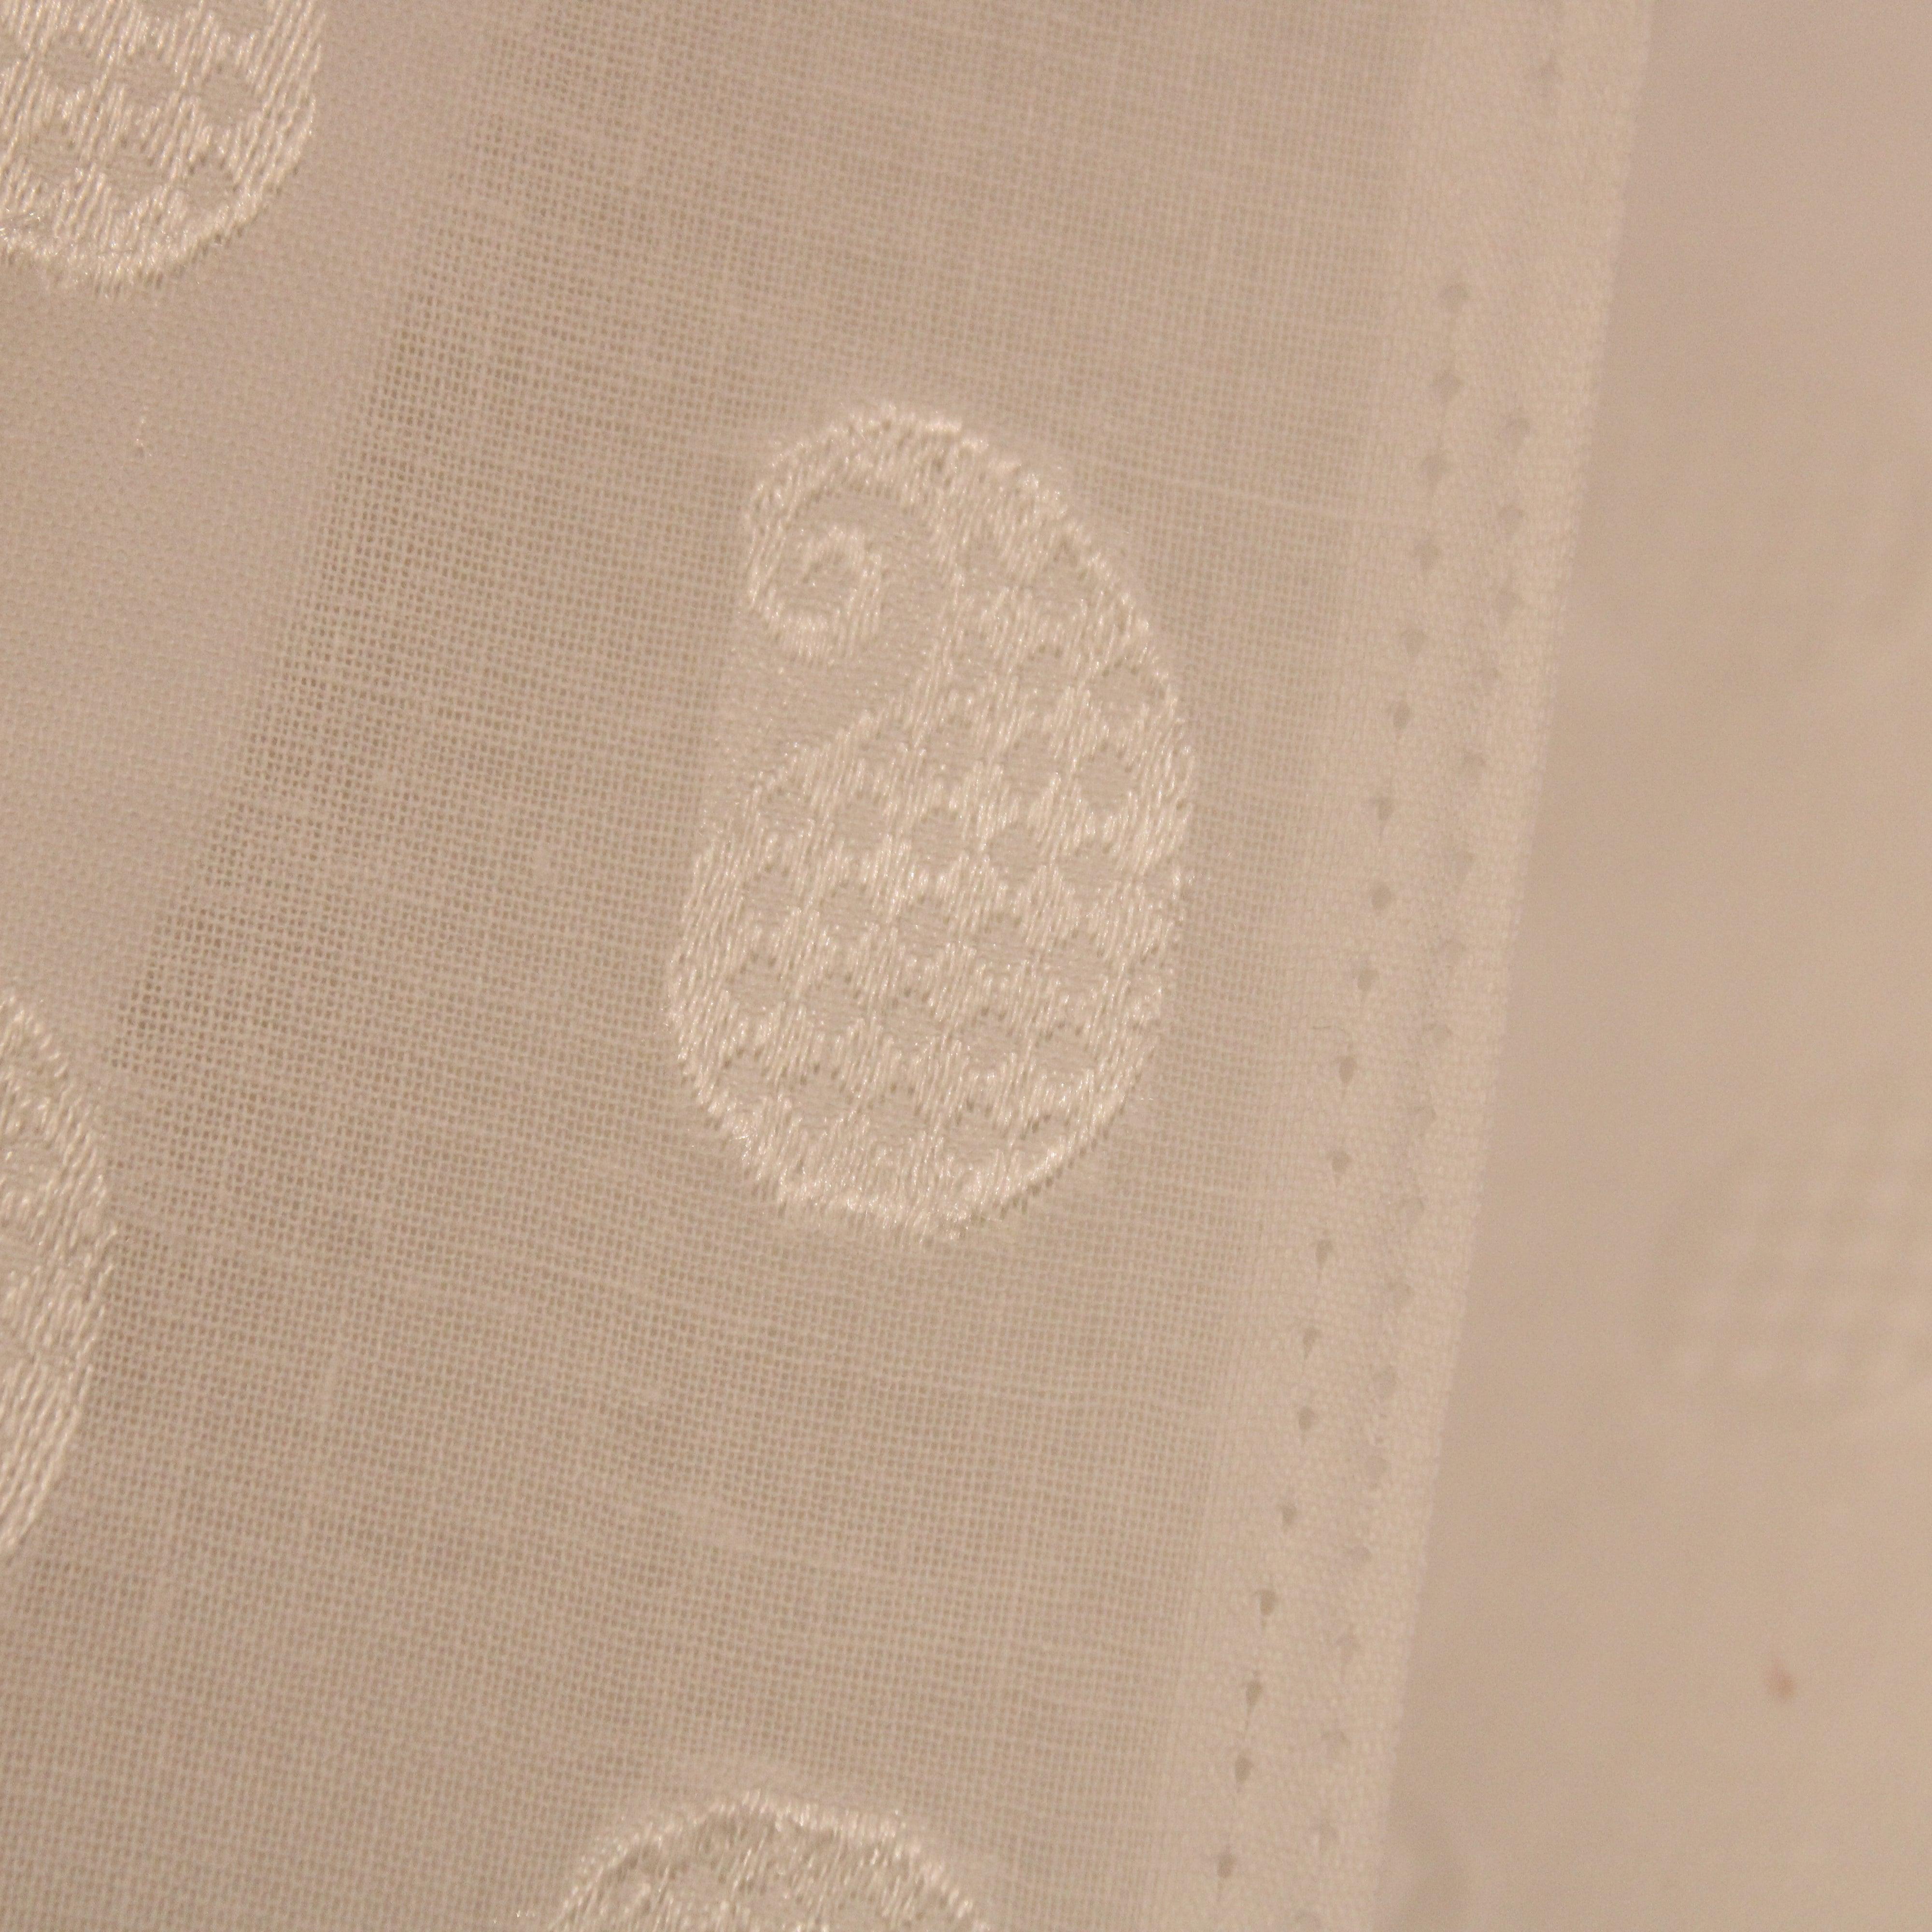 Dream weave - Cotton White Paisley Woven Fabric - M'Foks